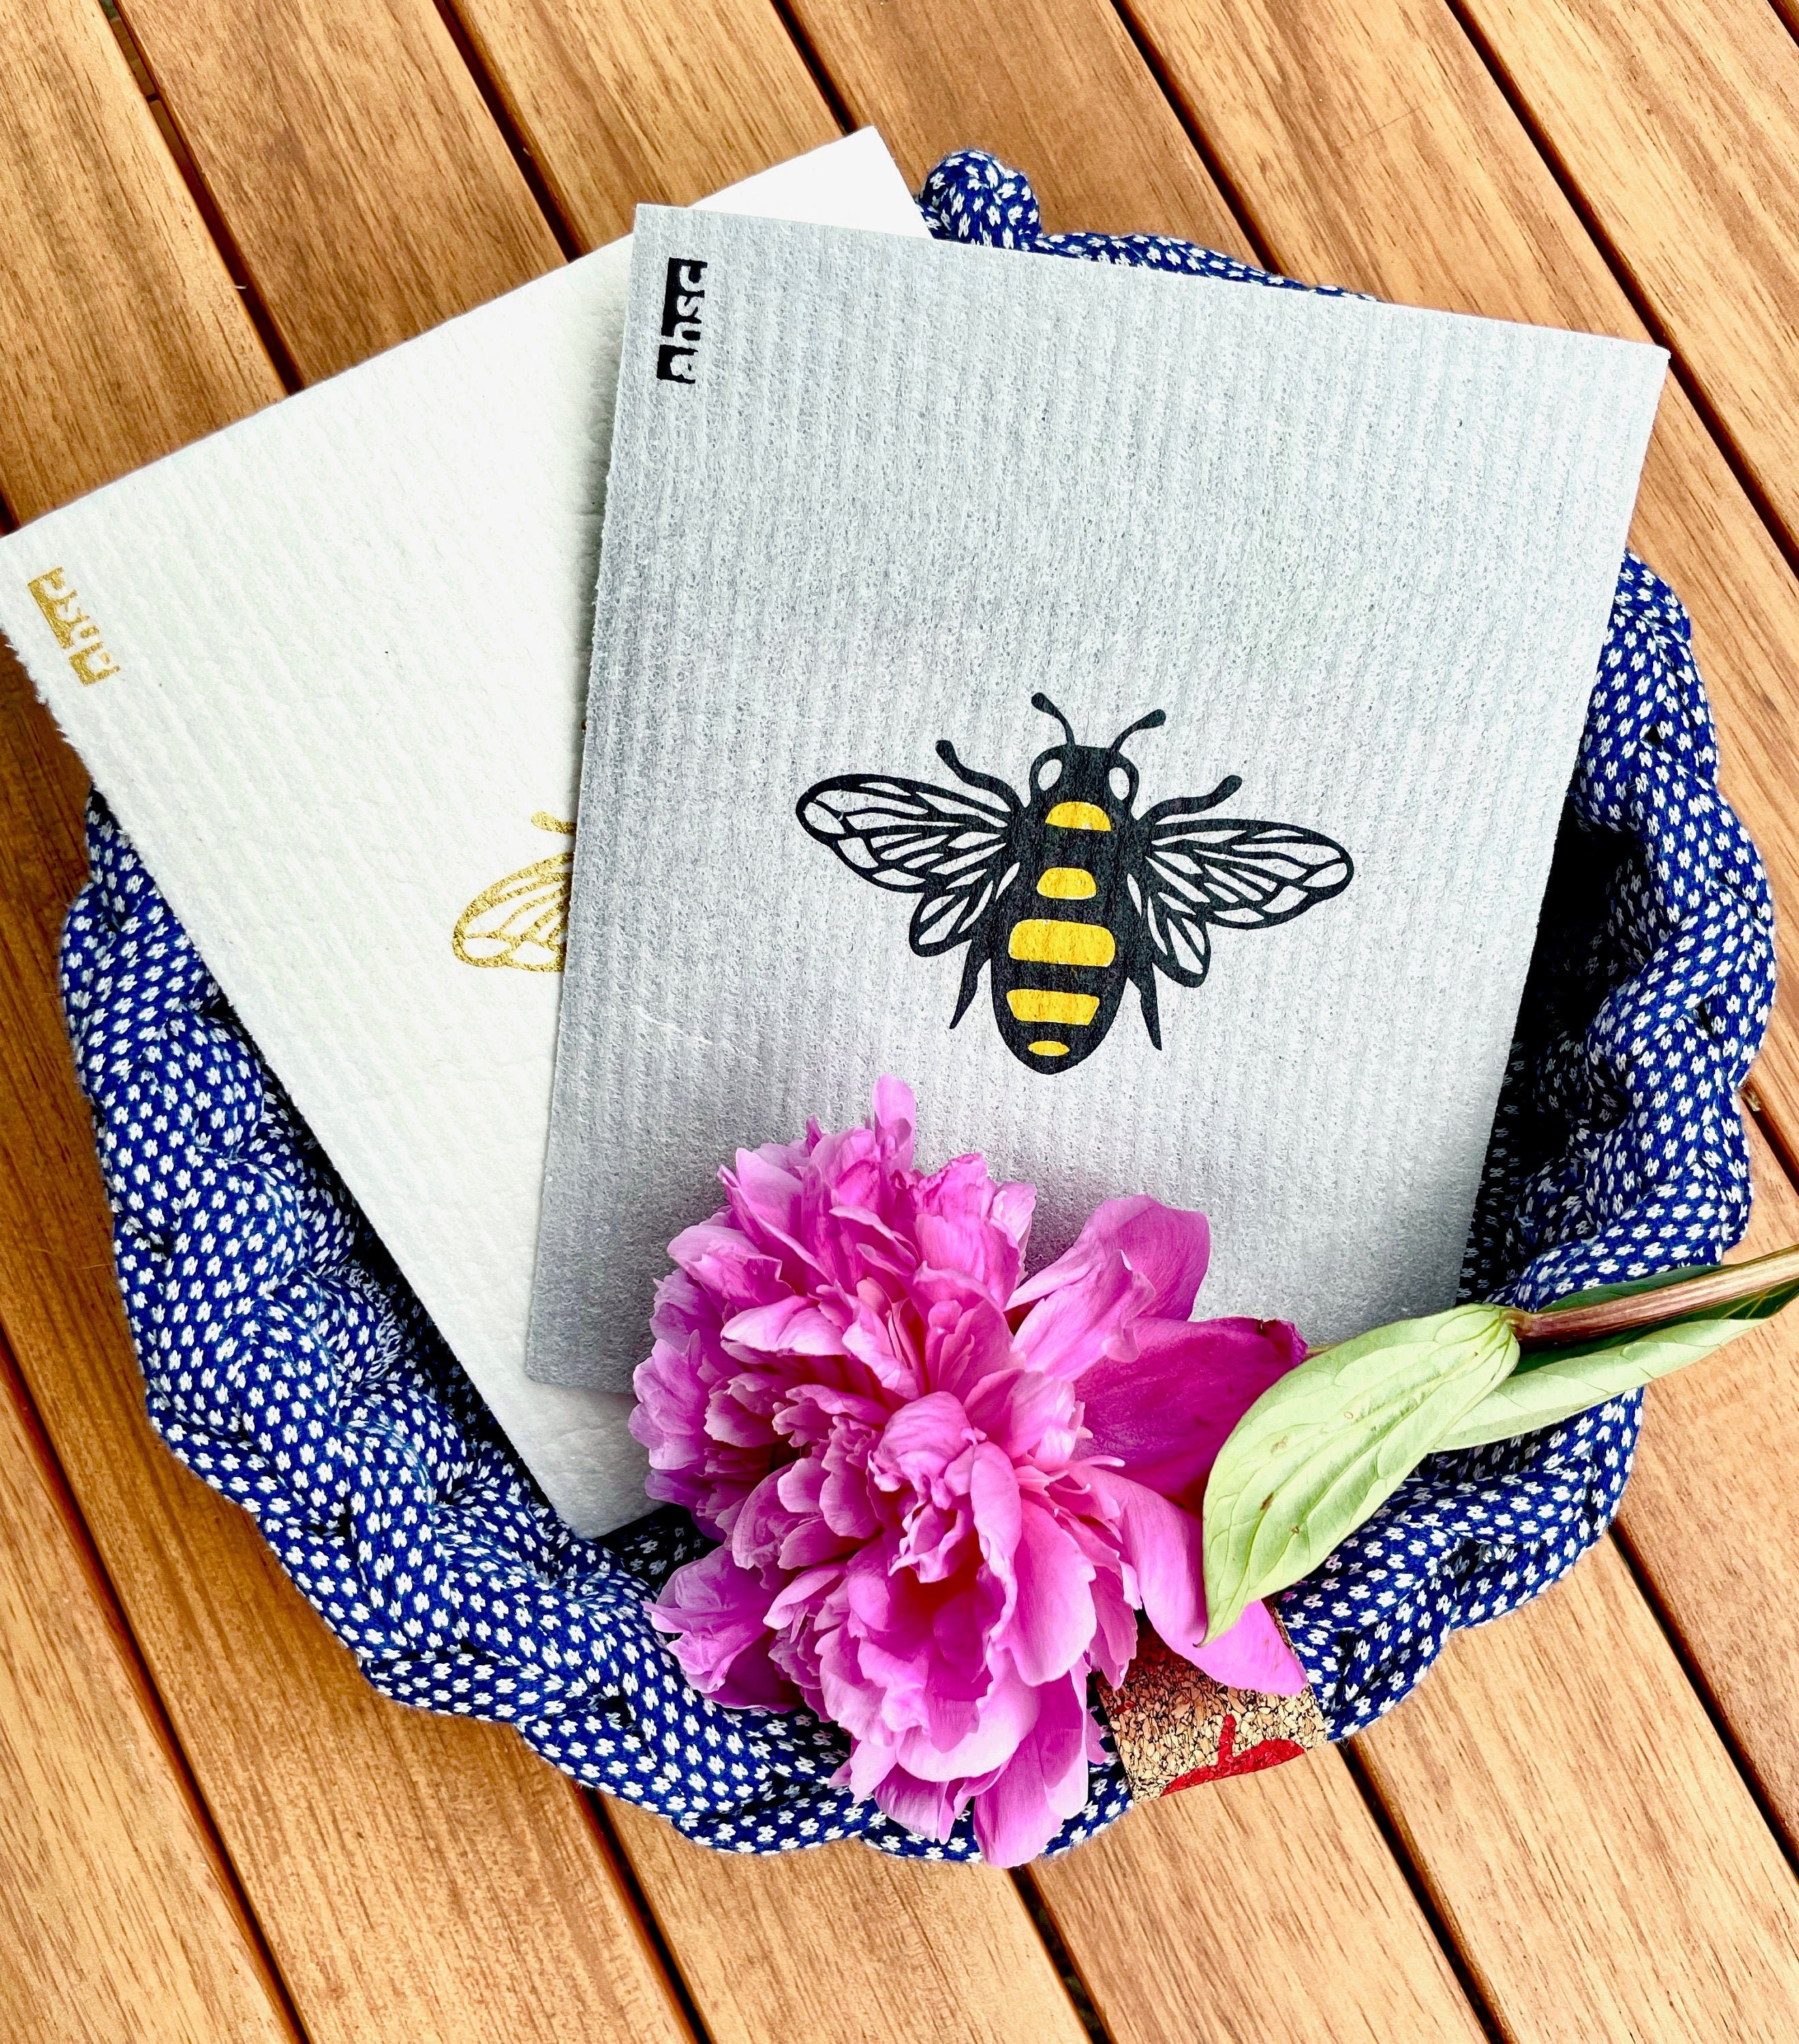 Bees & Bugs on Grey Swedish Dishcloth